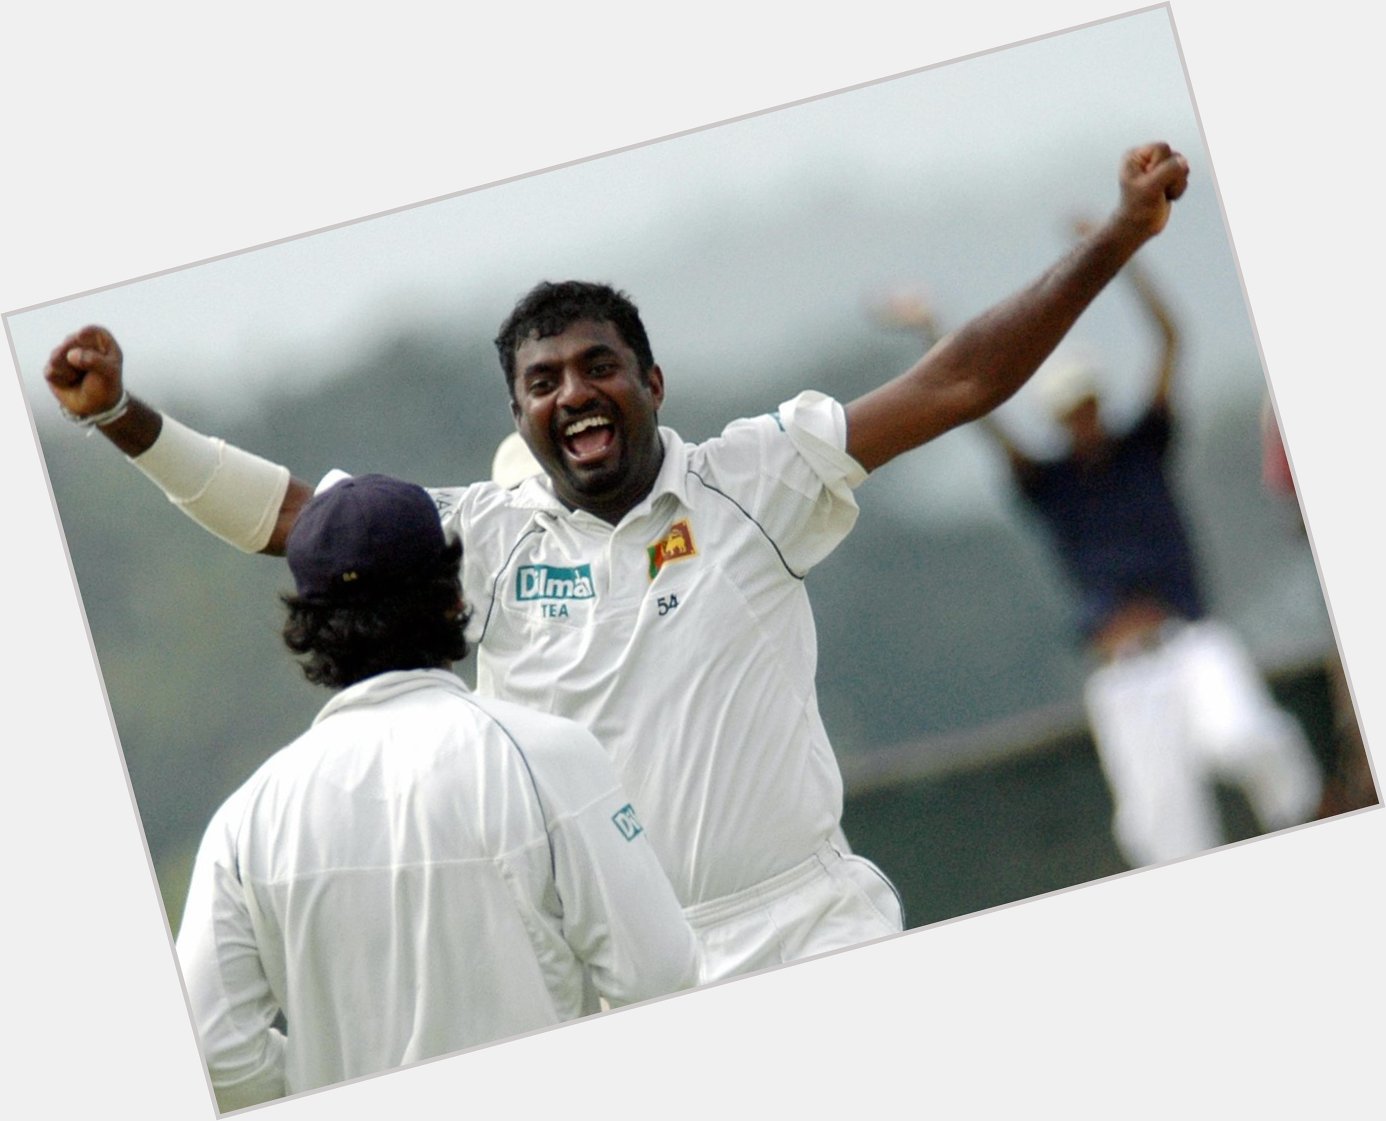 Happy birthday to Sri Lankan legend Muttiah Muralitharan
800 Test wickets. 
534 ODI wickets.  